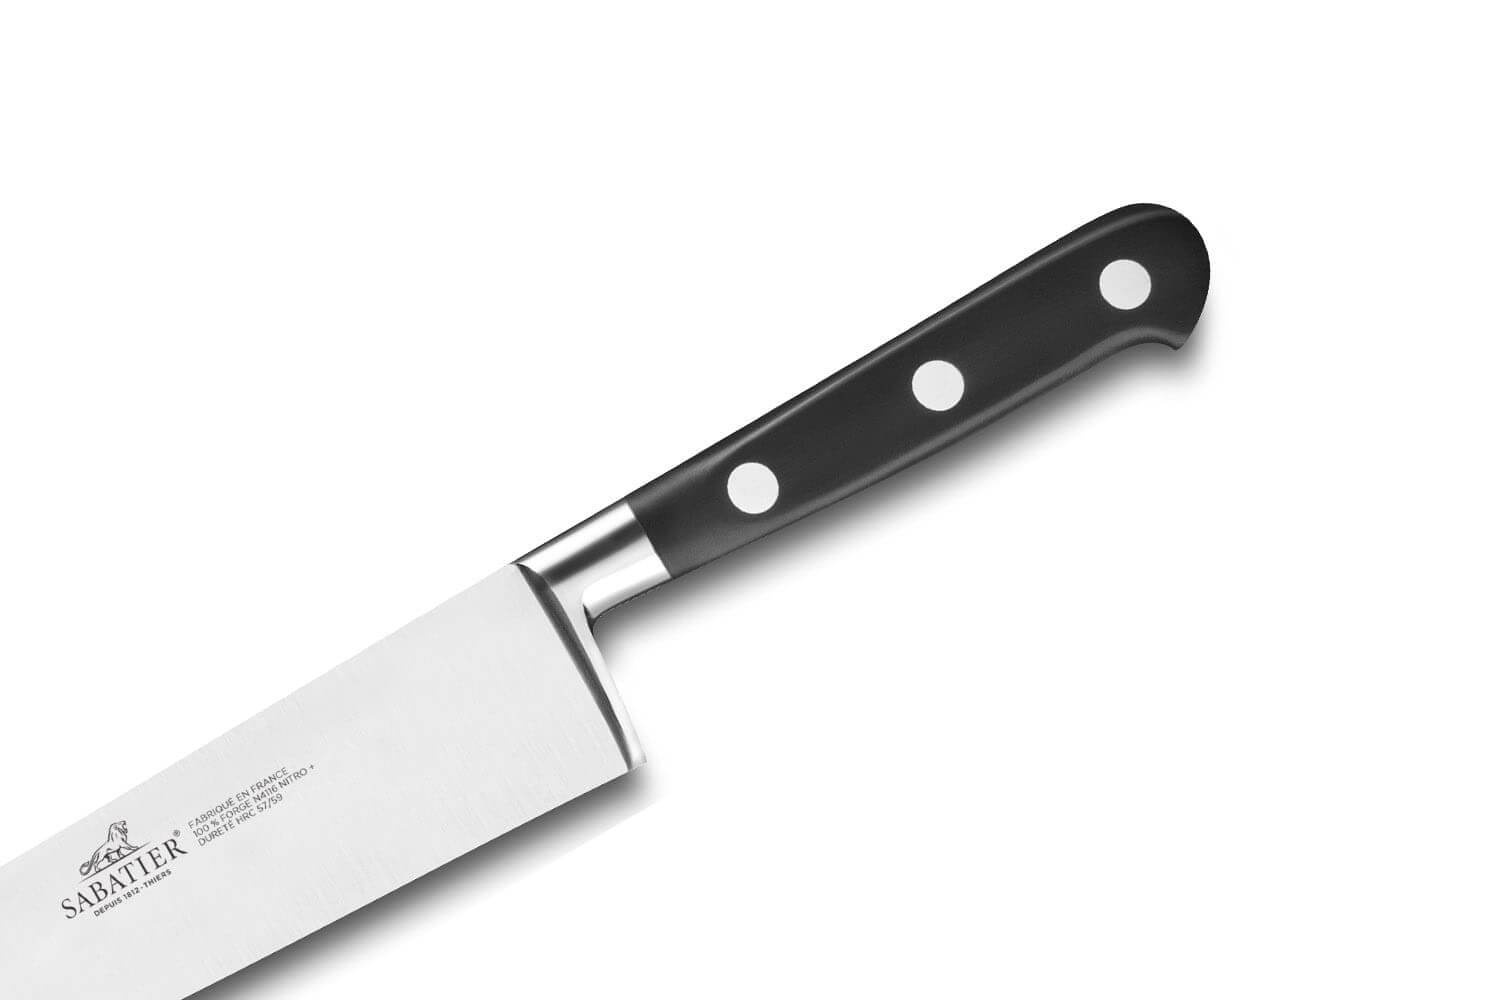 Couteau sabatier cuisine forge toque blanche - Roumaillac